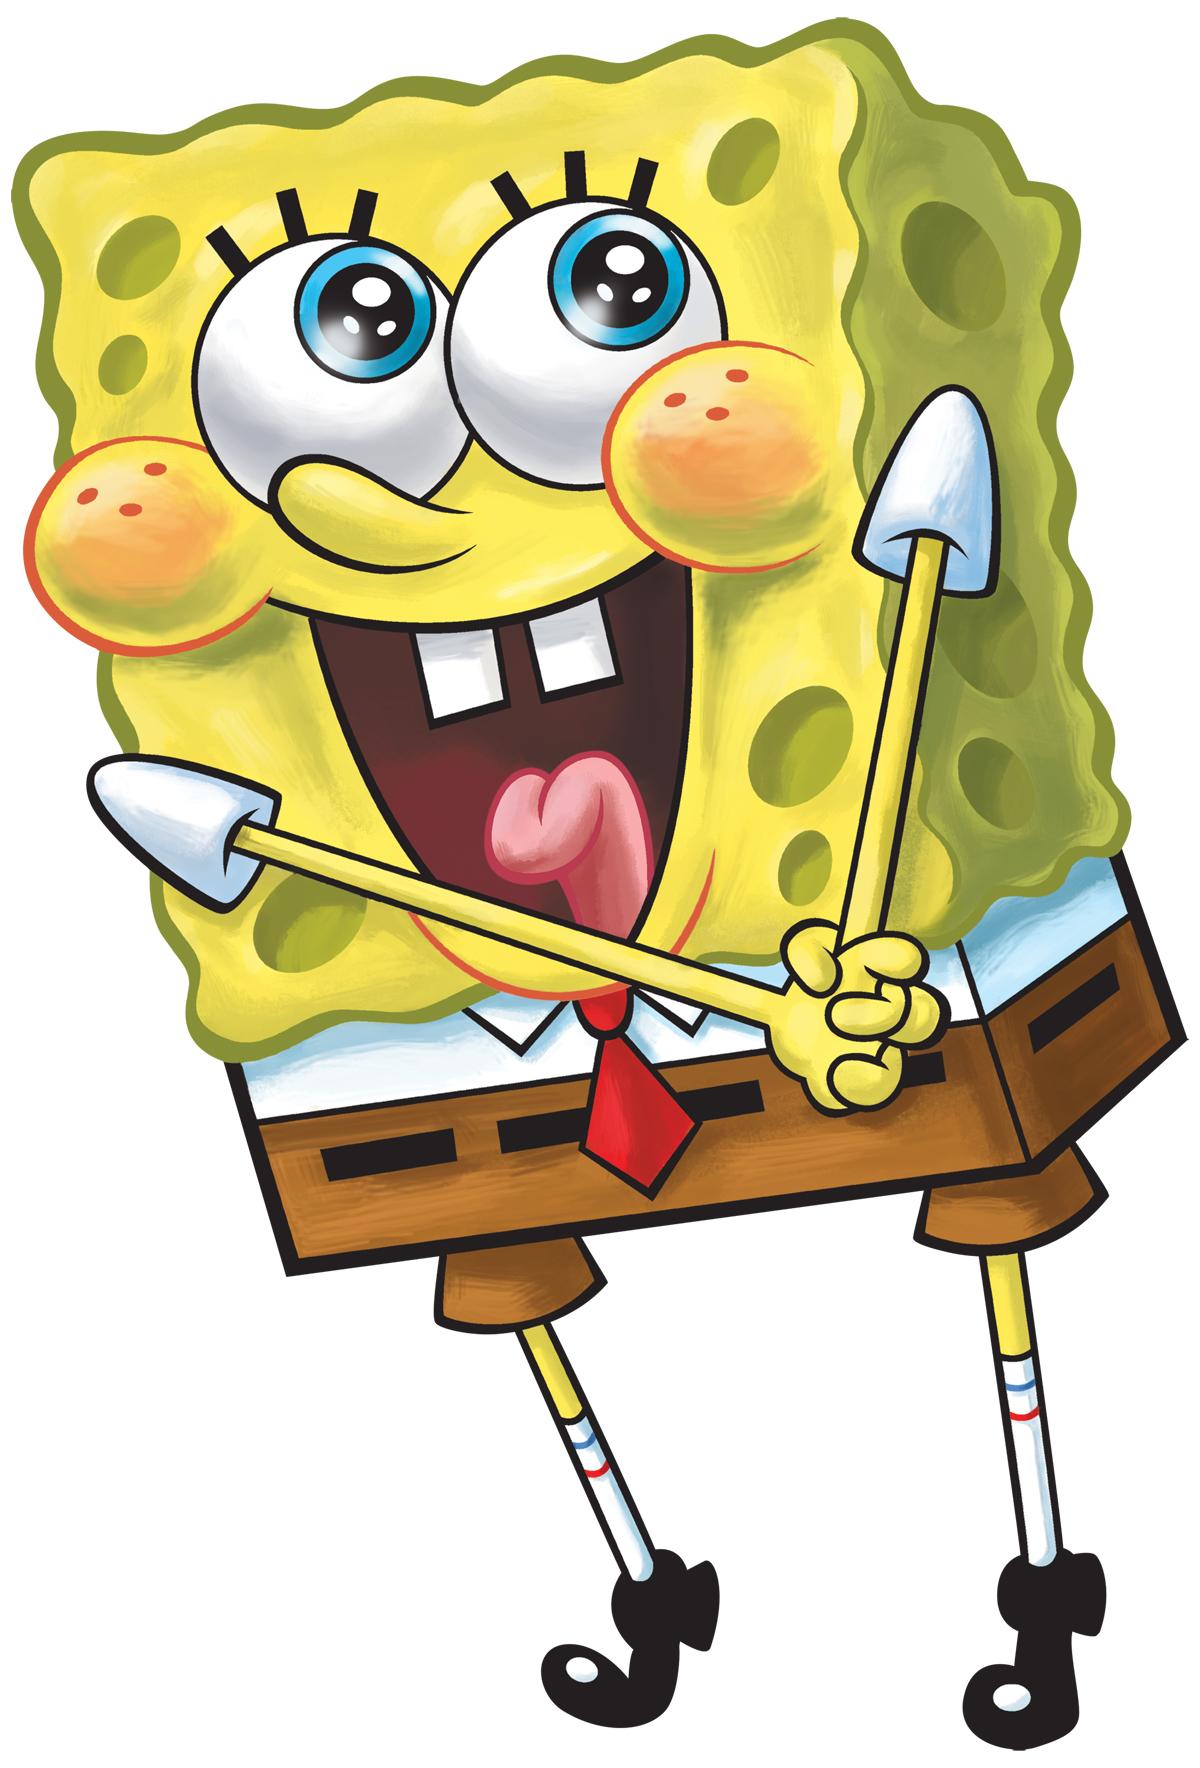 Spongebob Squarepants Character HD Image Wallpapers for iPhone 6